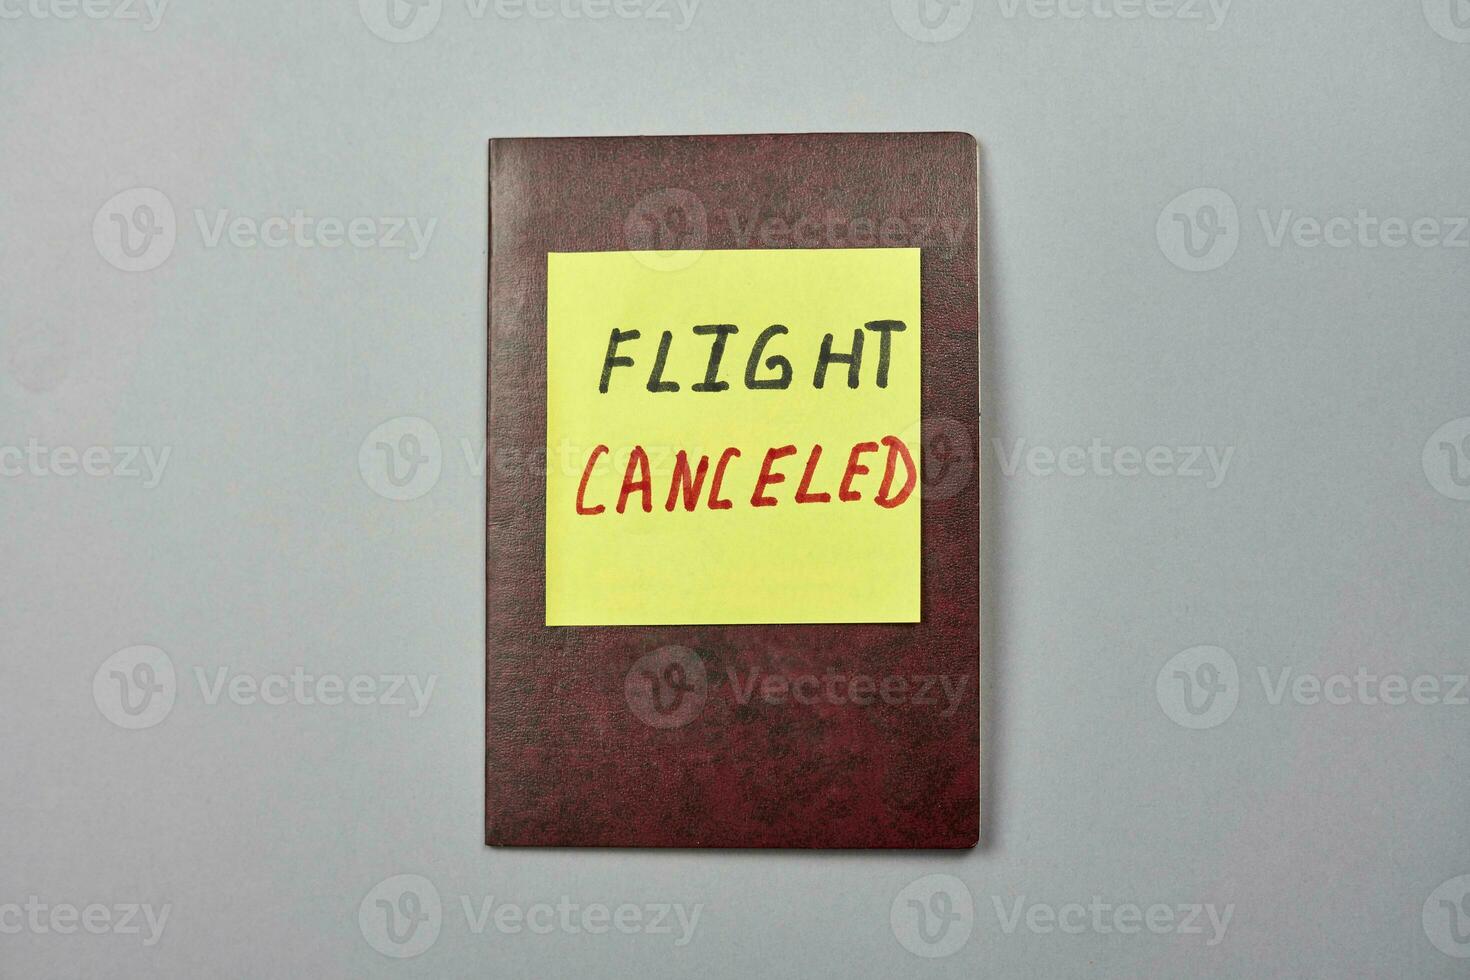 COVID-19 Coronavirus Flight cancellations photo